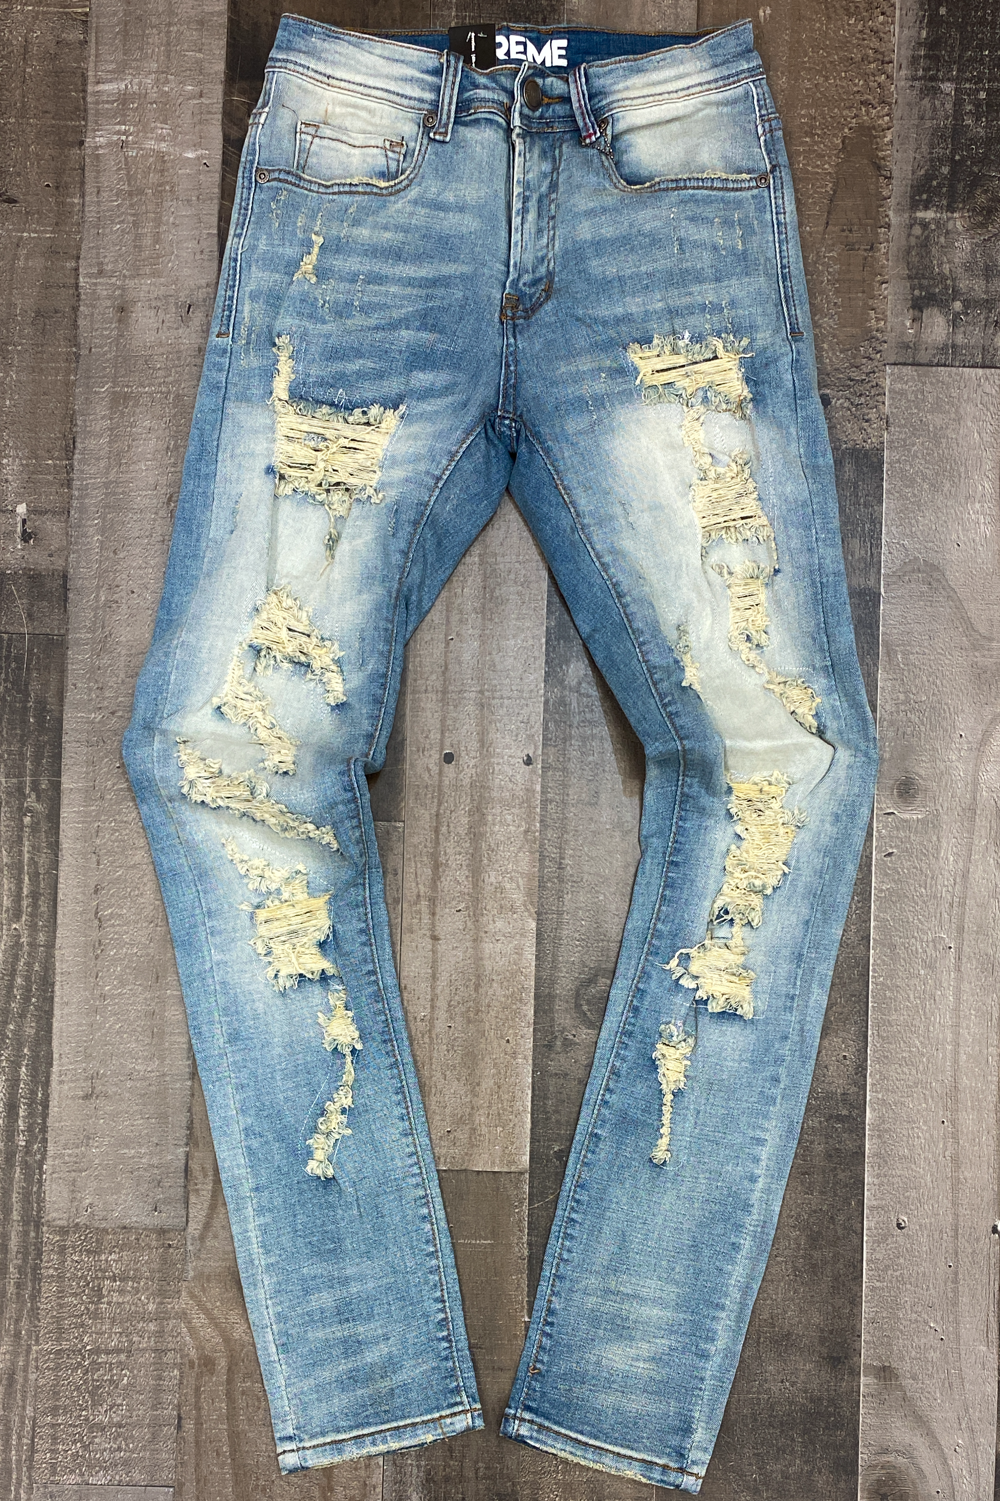 Preme- ripped denim jeans